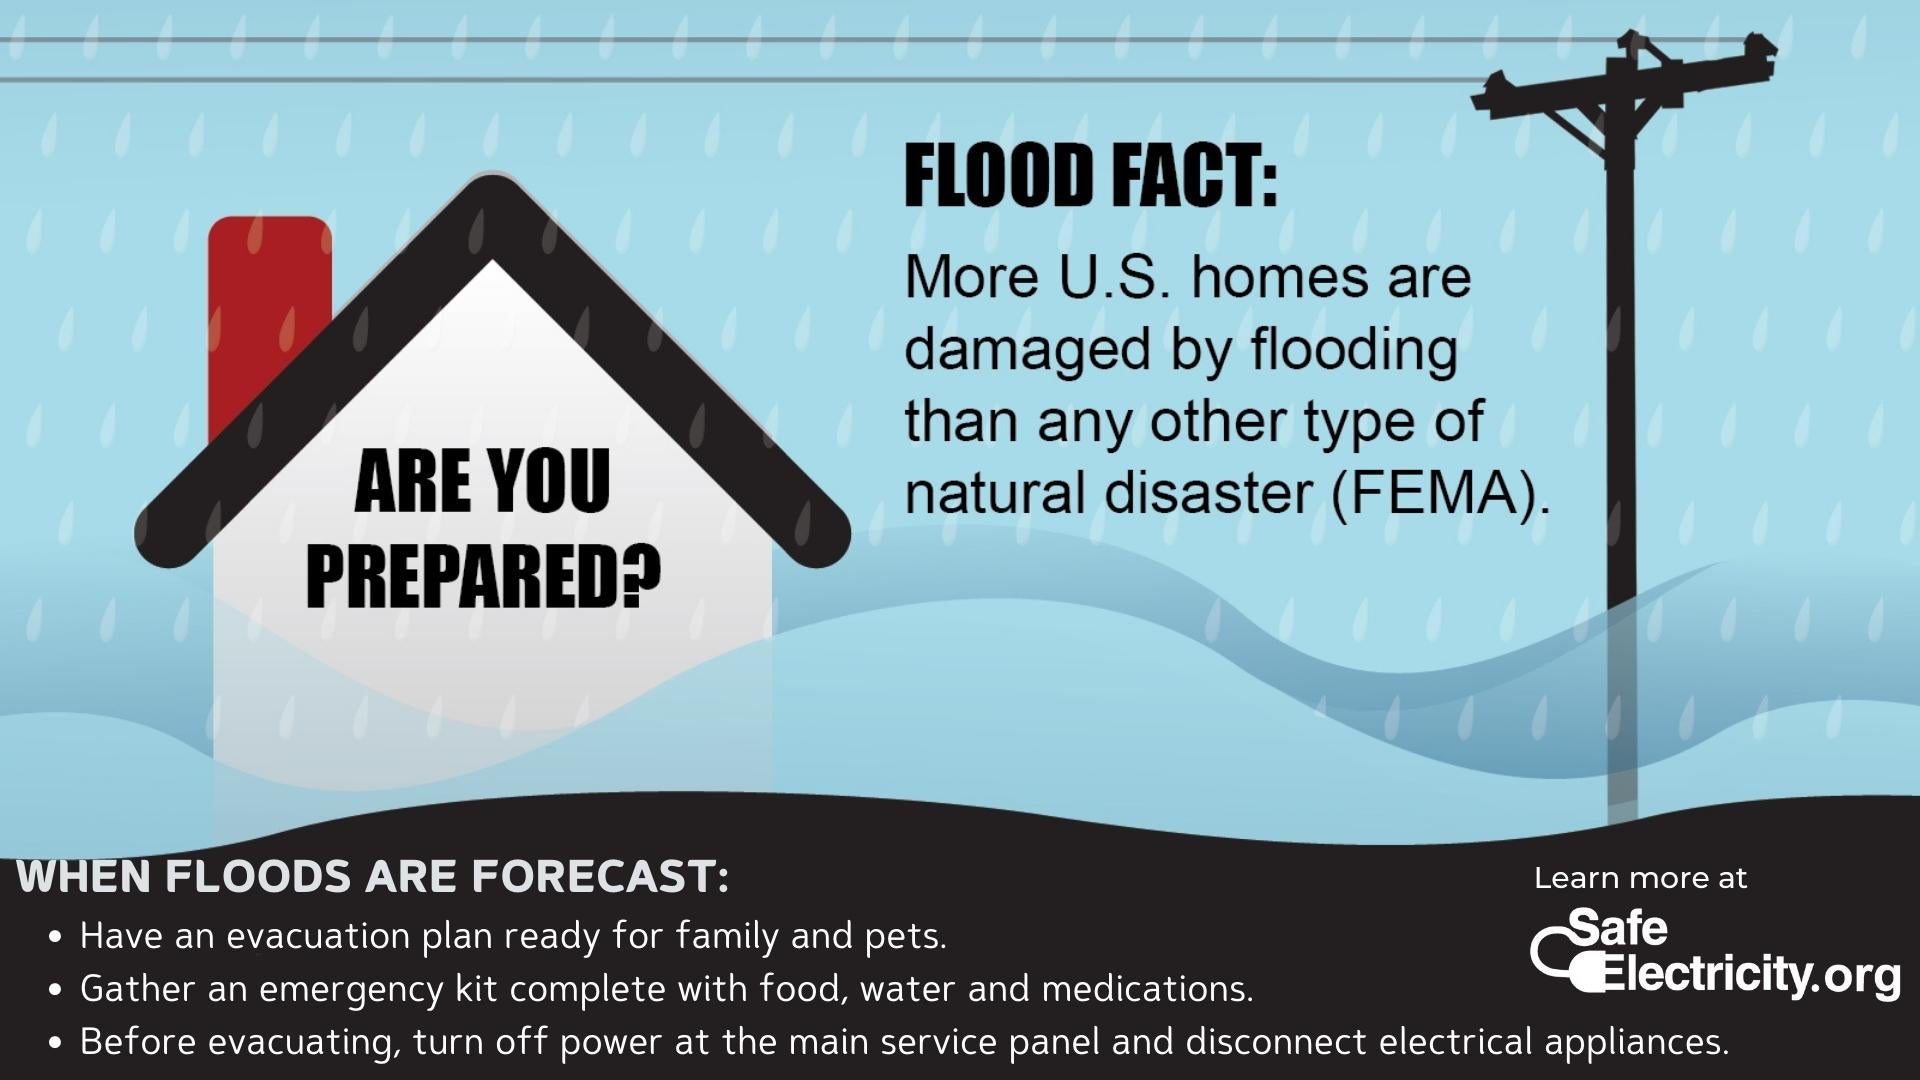 Remember flood safety